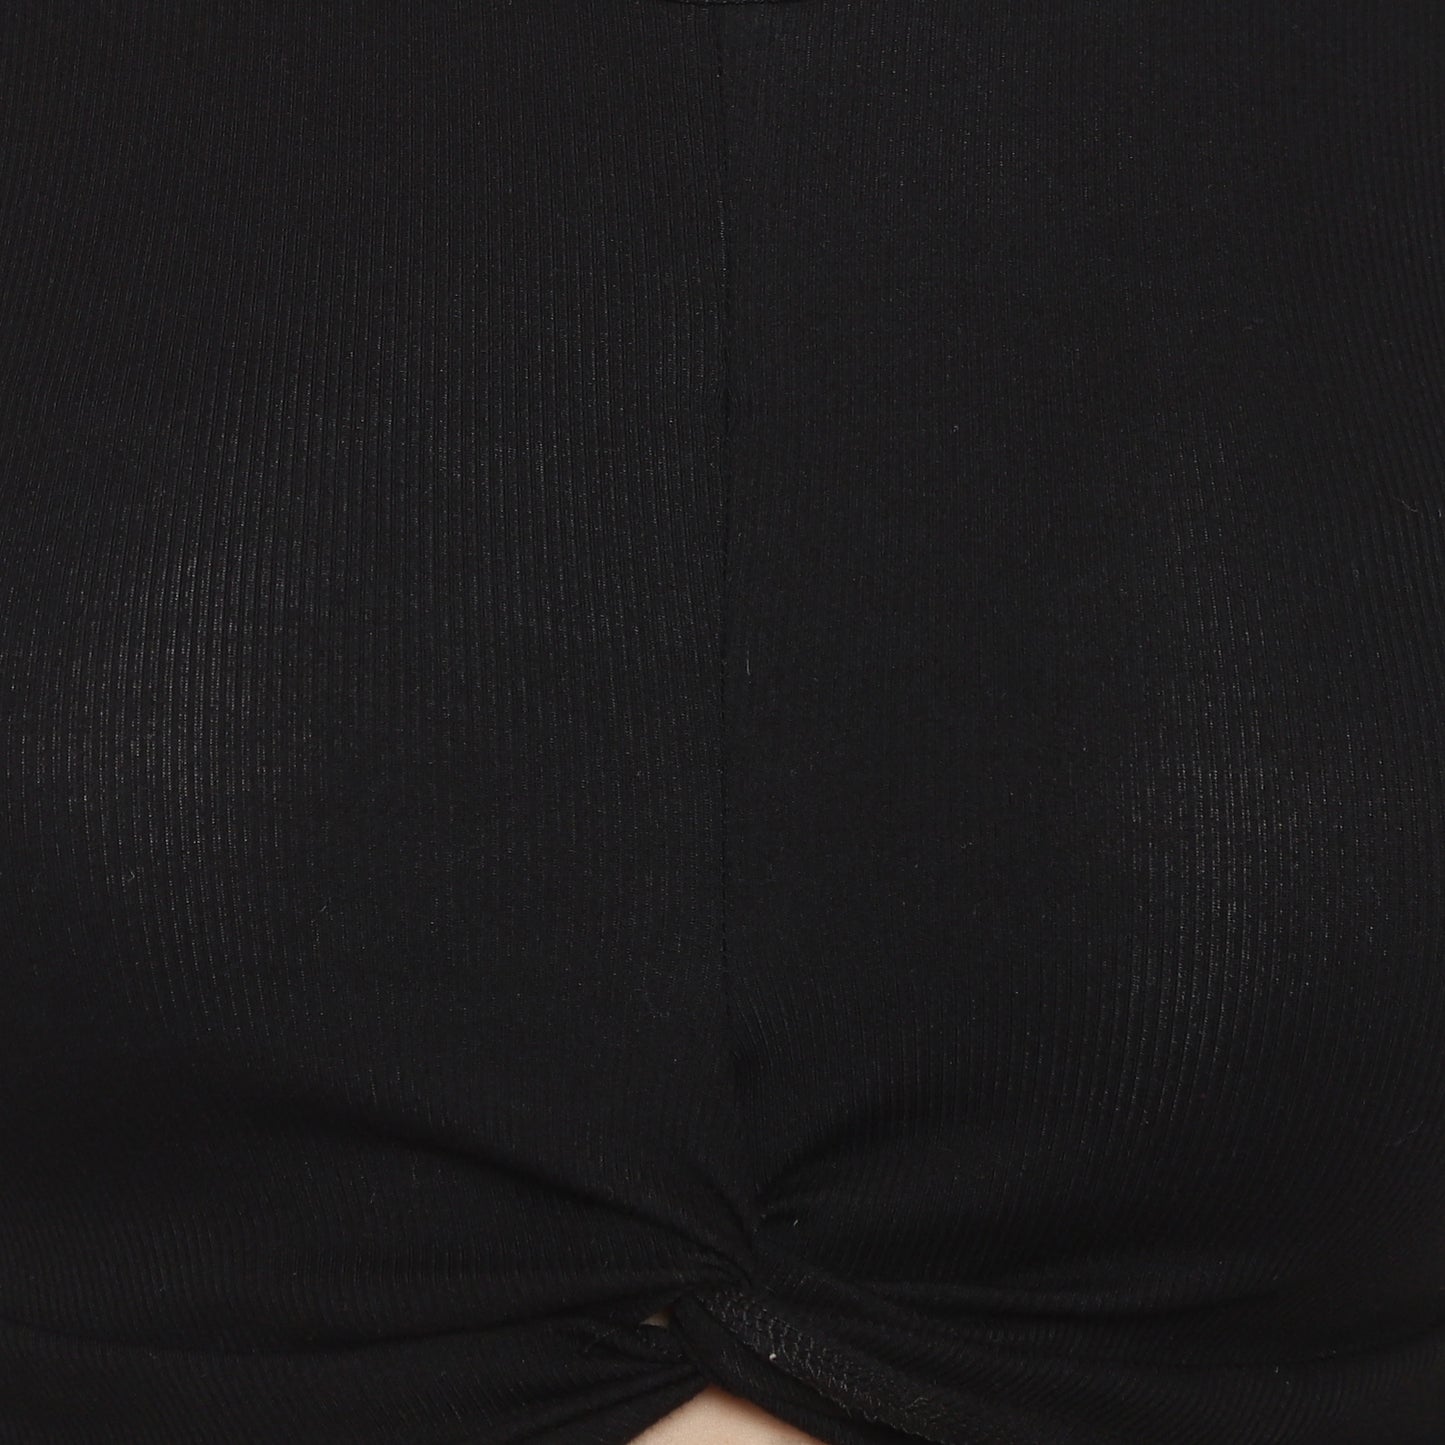 Black Knot Design Crop Top for Women